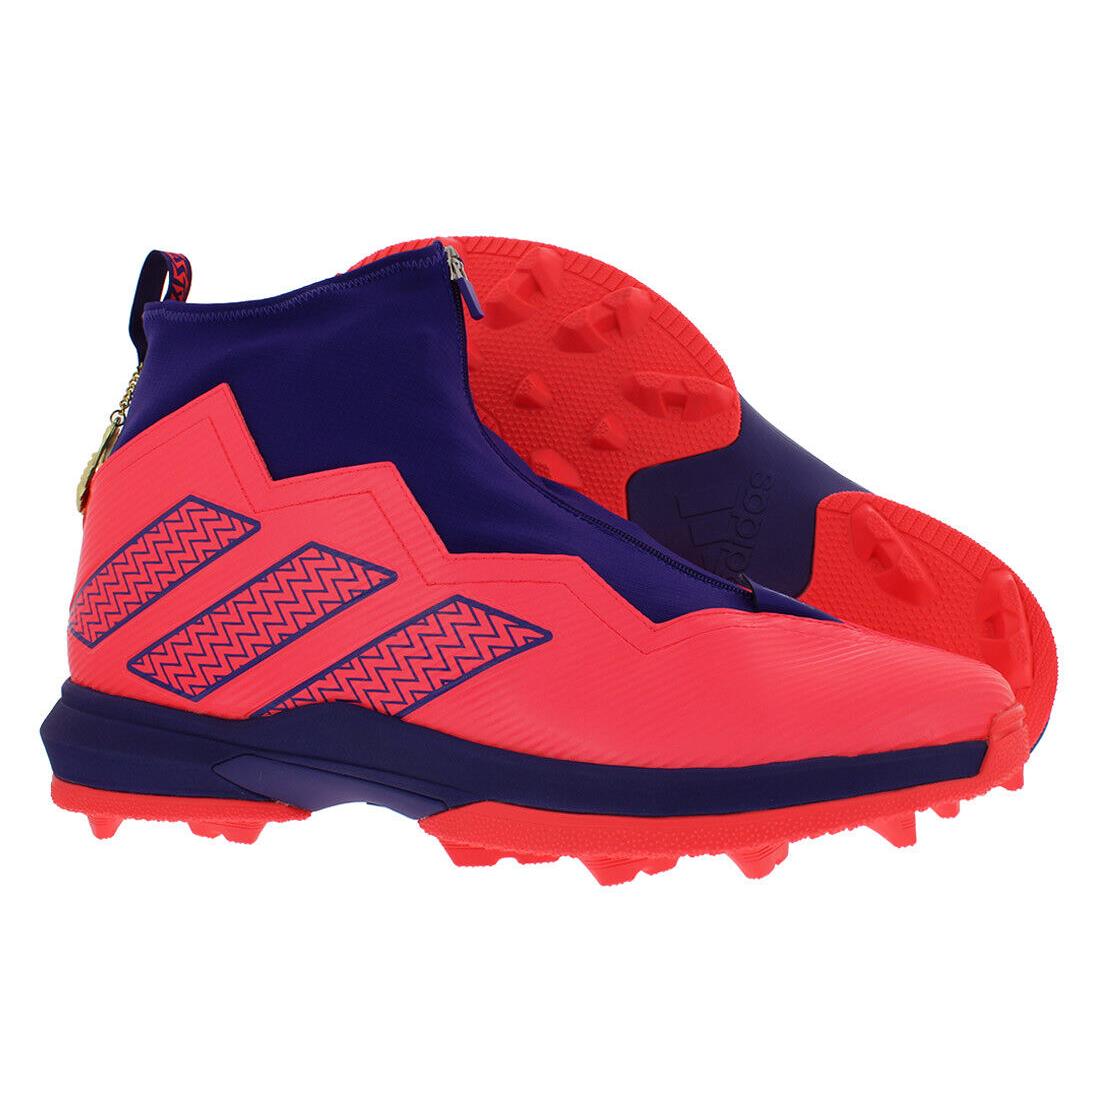 Adidas SM Nasty Torsion Mens Shoes - Signal Pink/Energy Ink/Signal Pink, Main: Pink